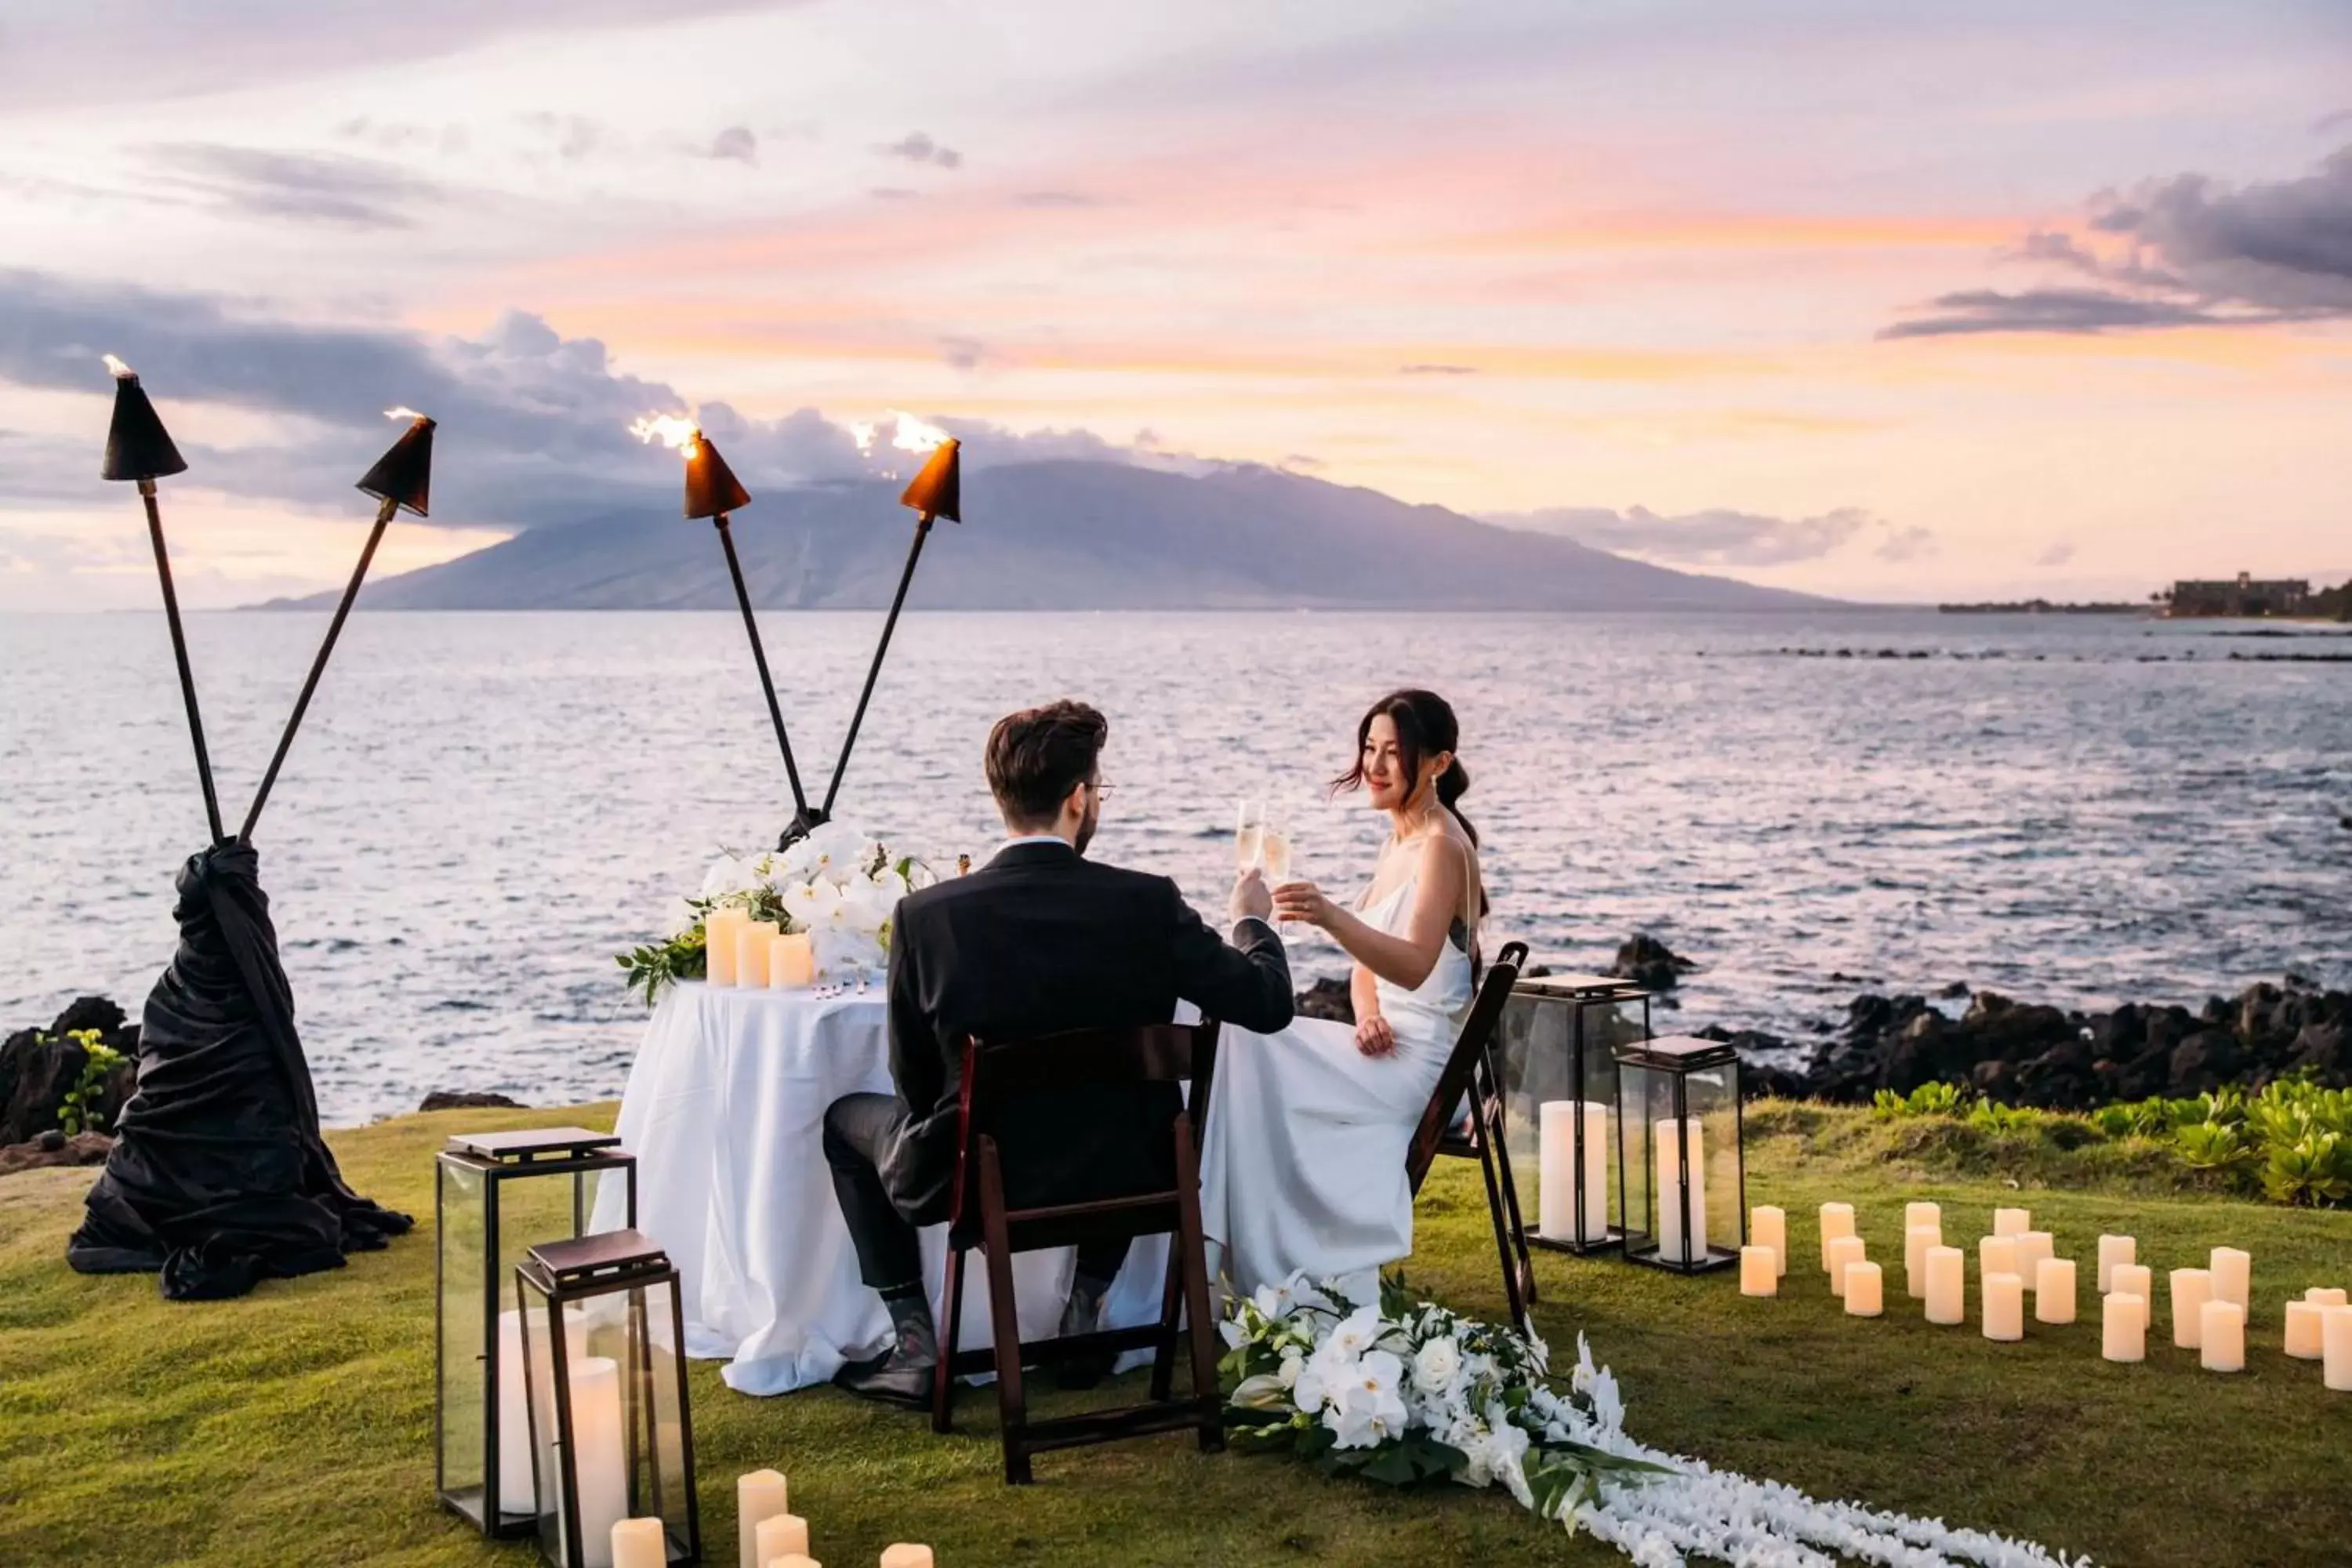 Banquet/Function facilities in Wailea Beach Resort - Marriott, Maui